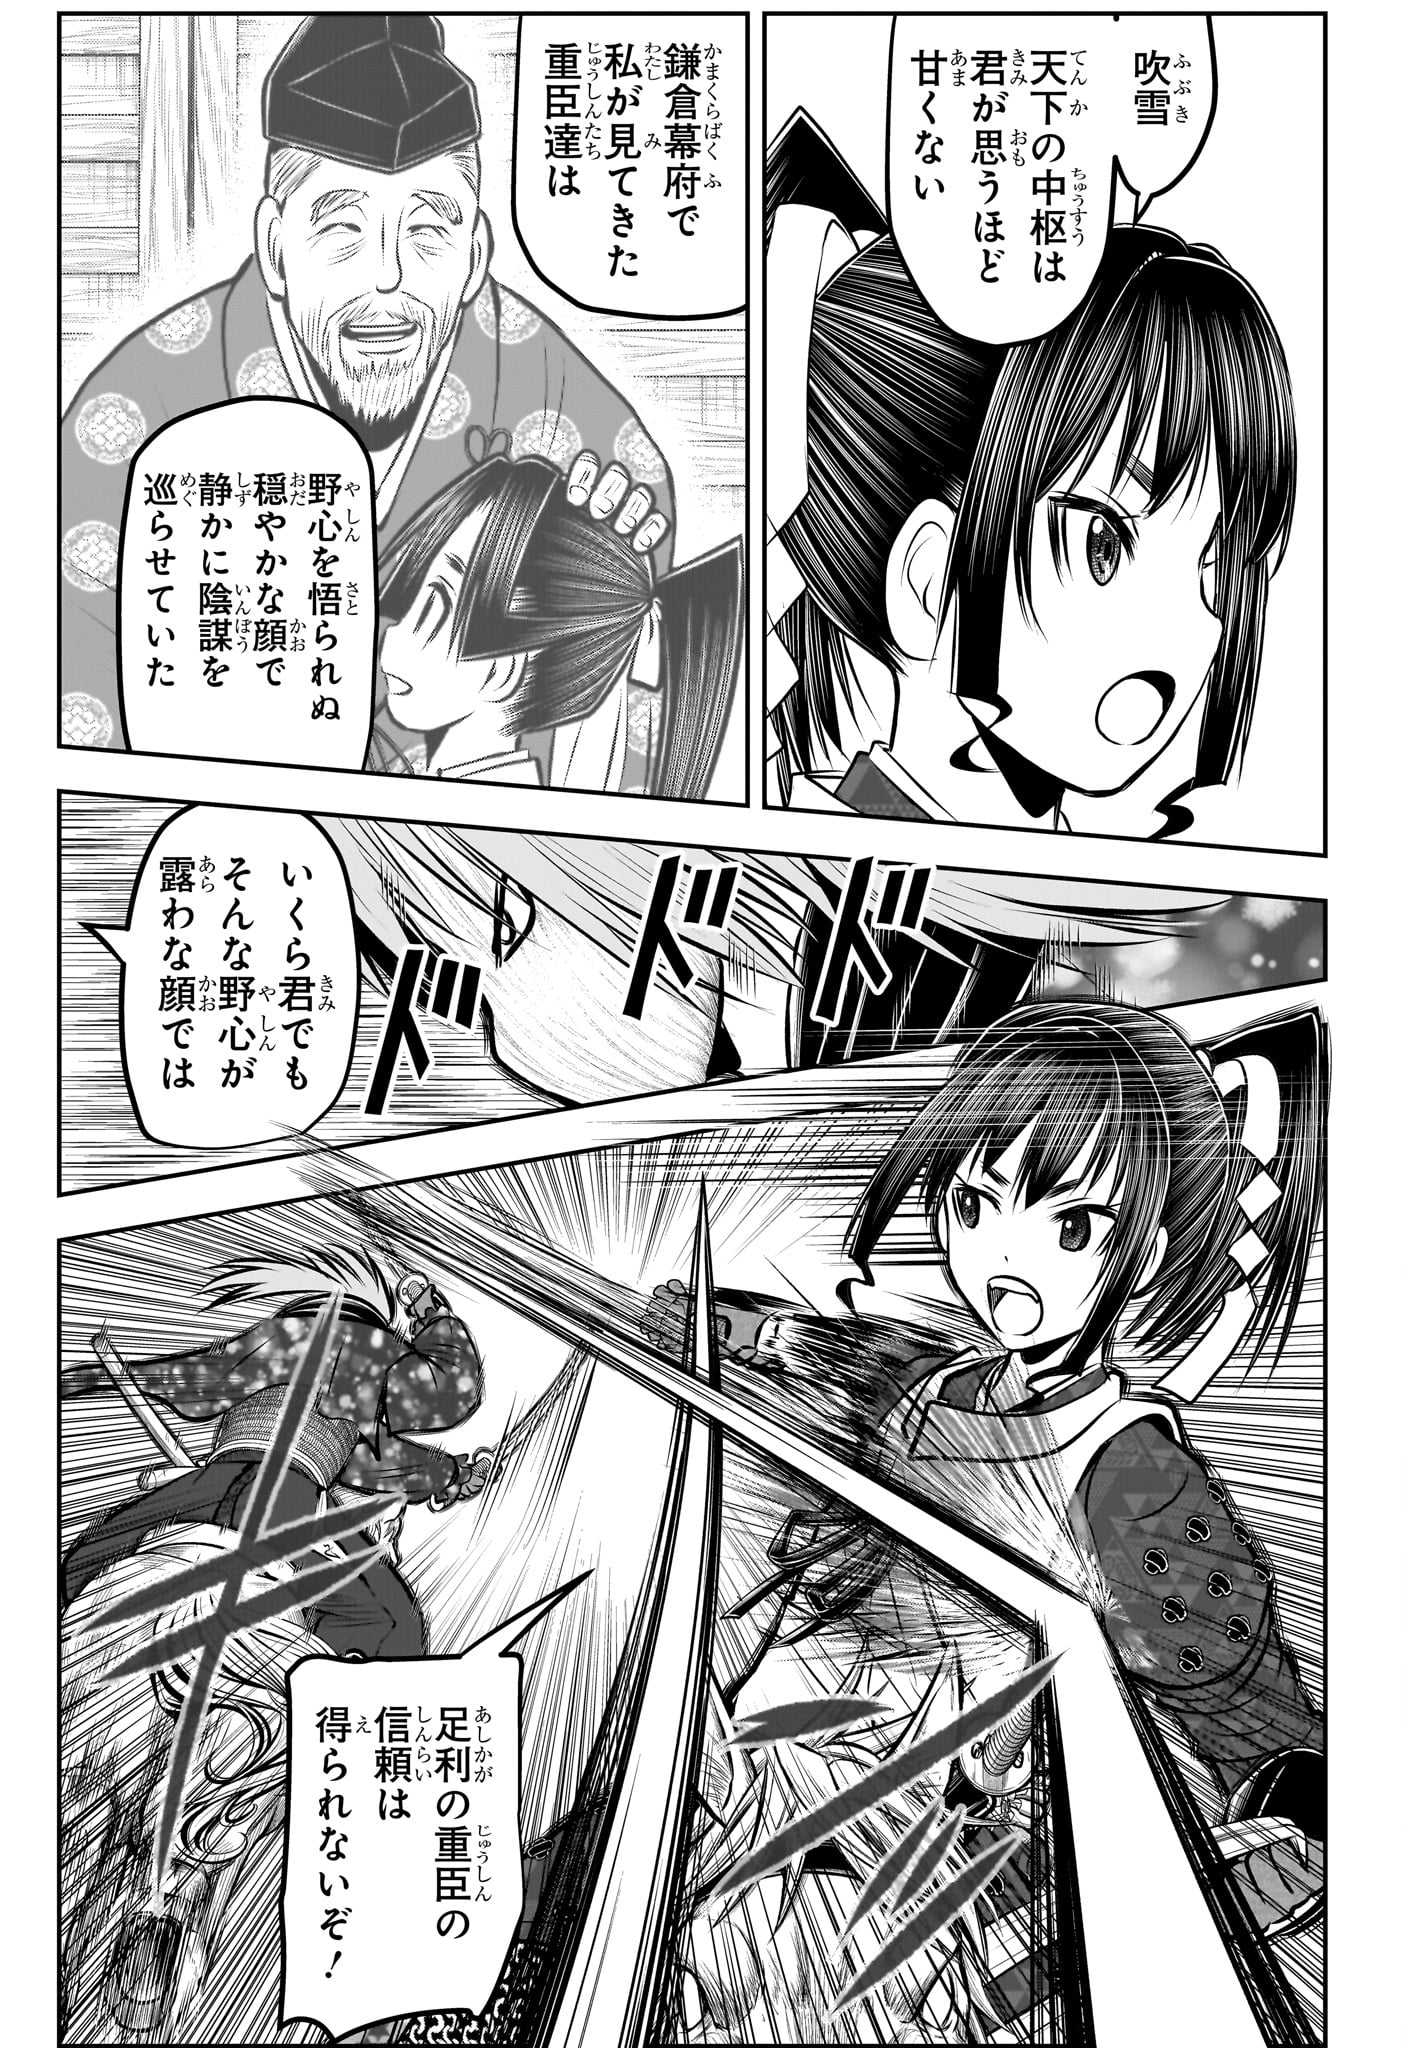 Nige Jouzu no Wakagimi - Chapter 160 - Page 13